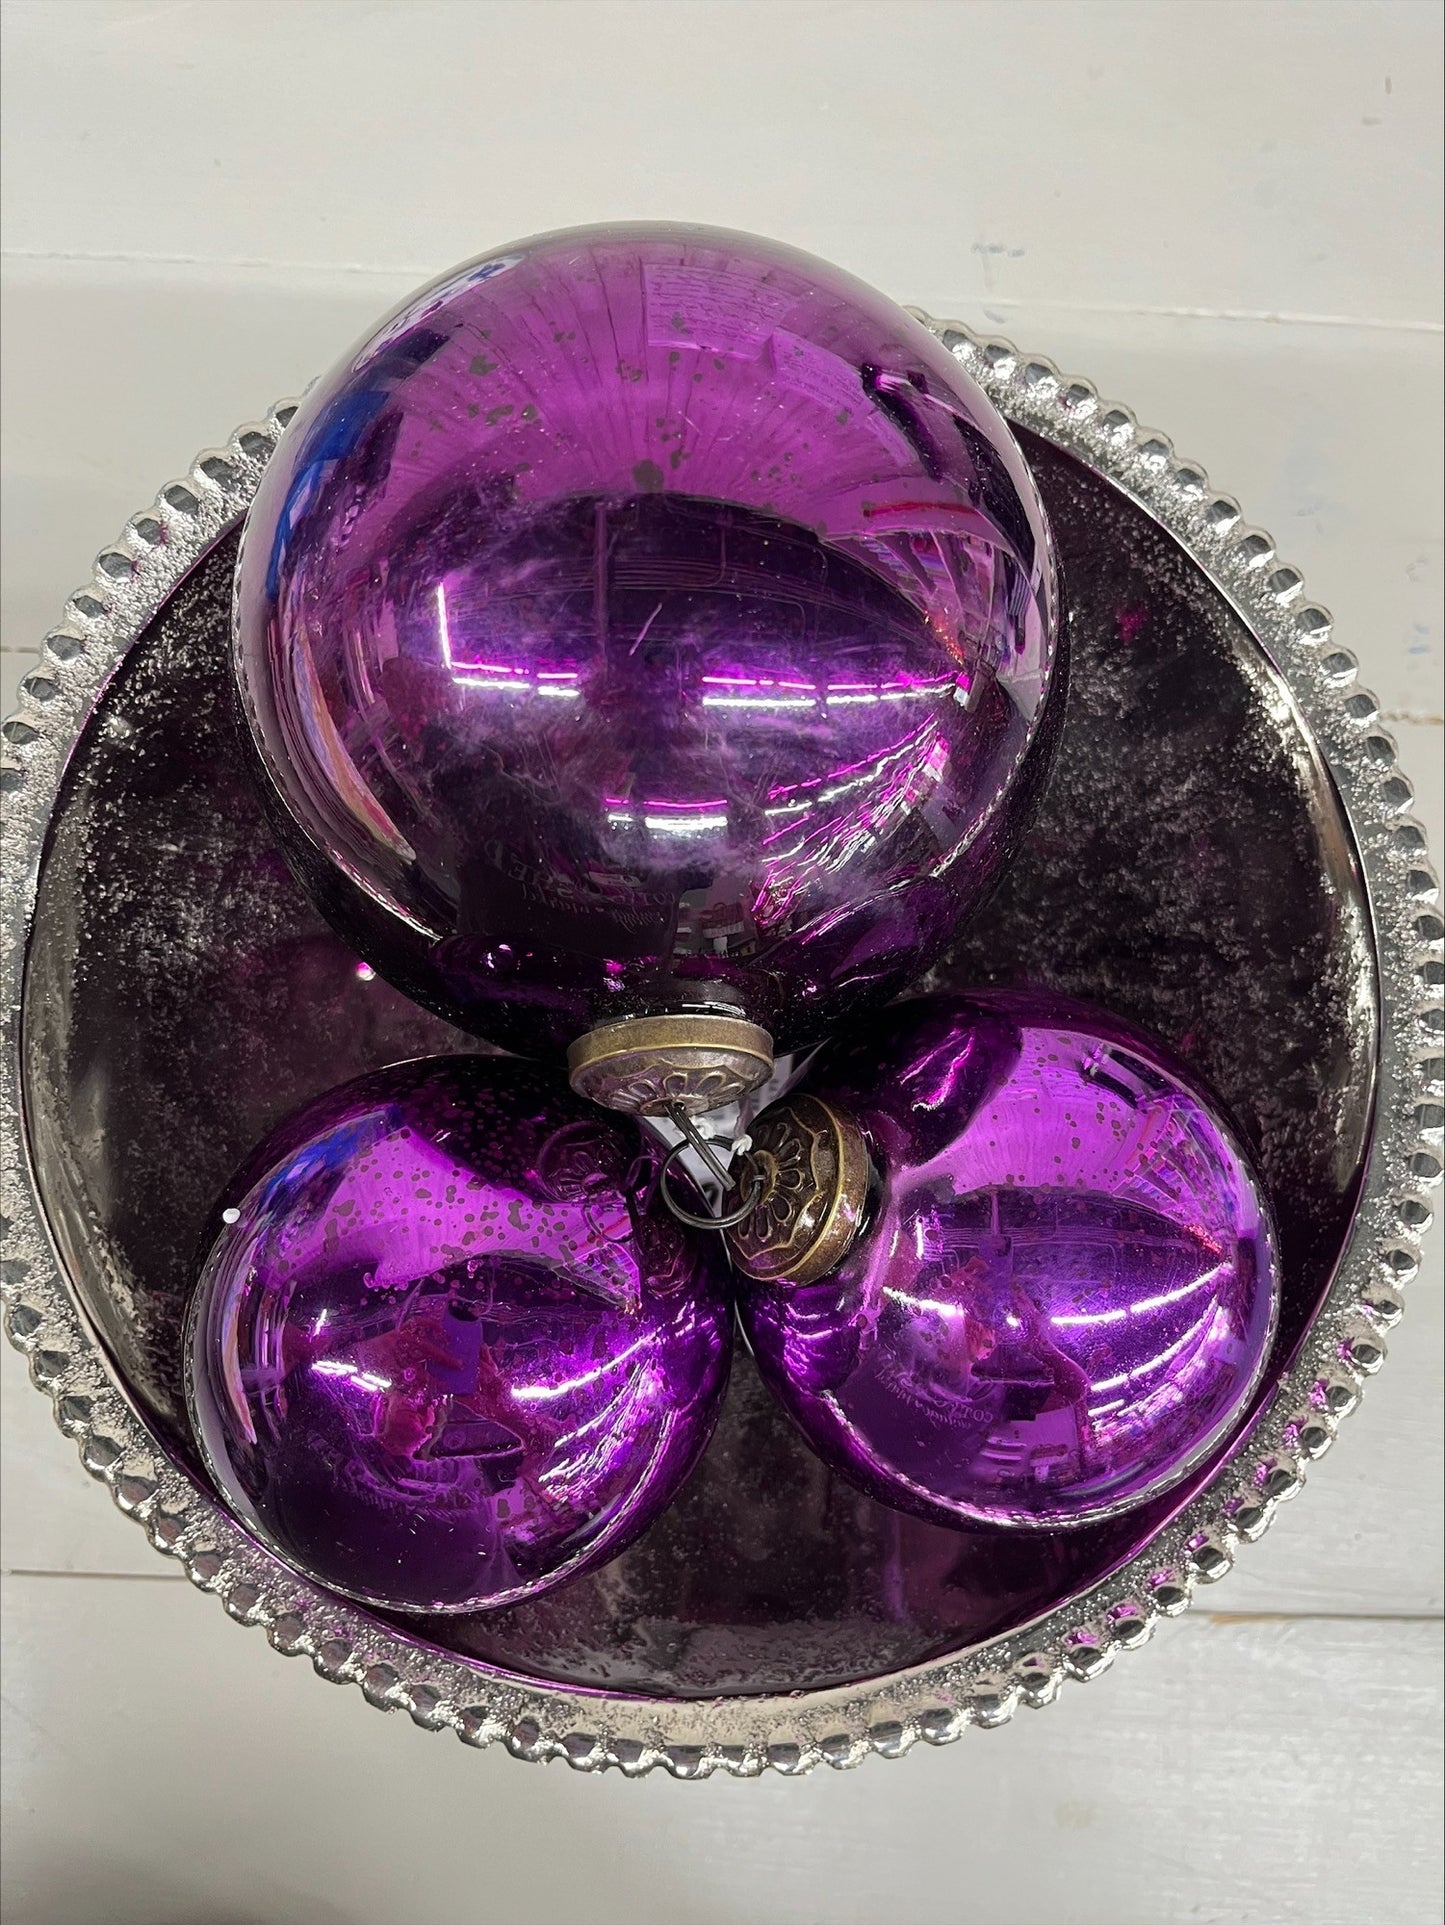 Mercury Glass Ball Ornament